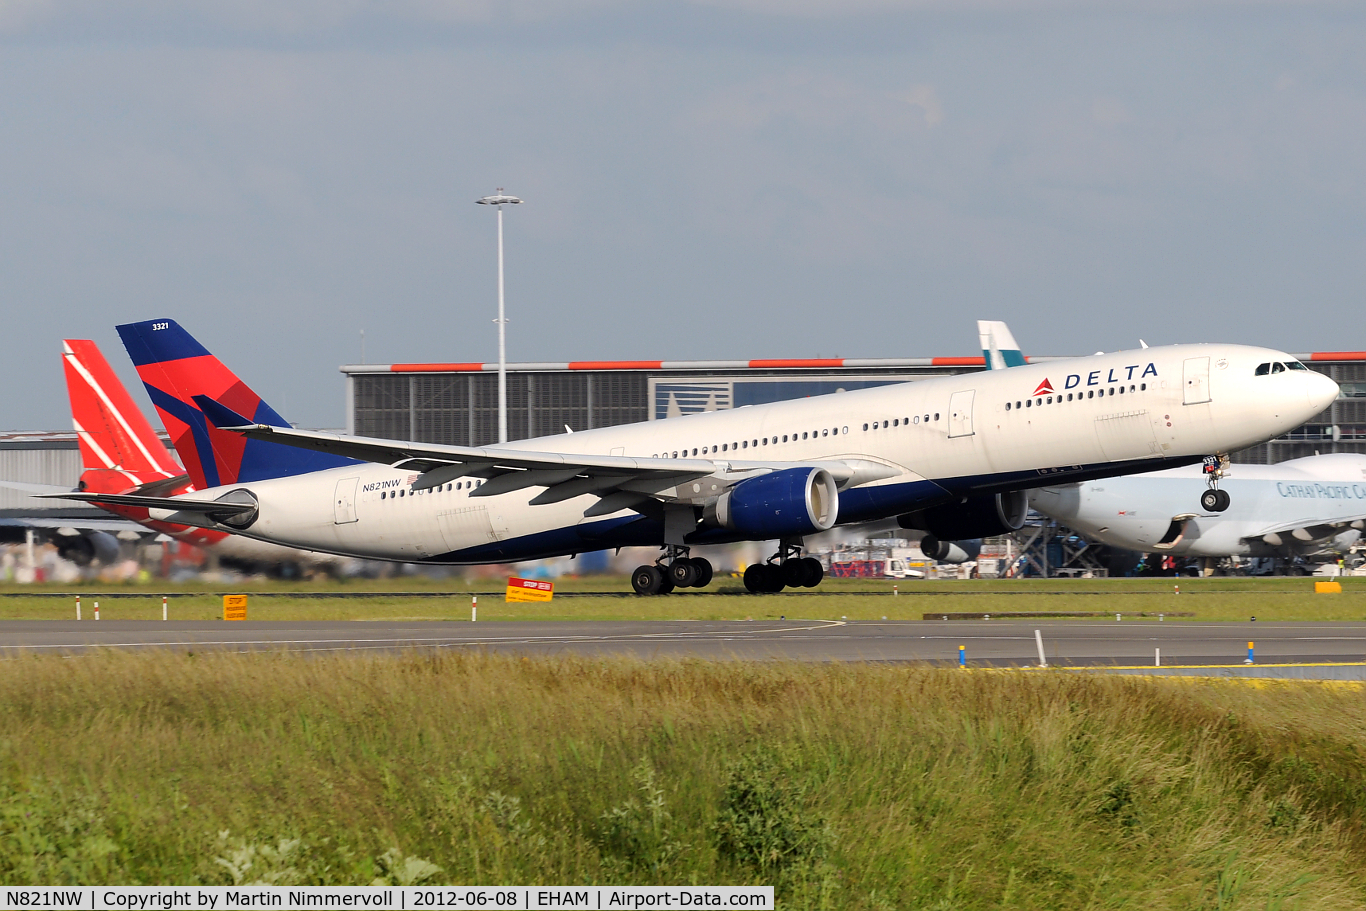 N821NW, 2007 Airbus A330-323 C/N 0865, Delta Air Lines